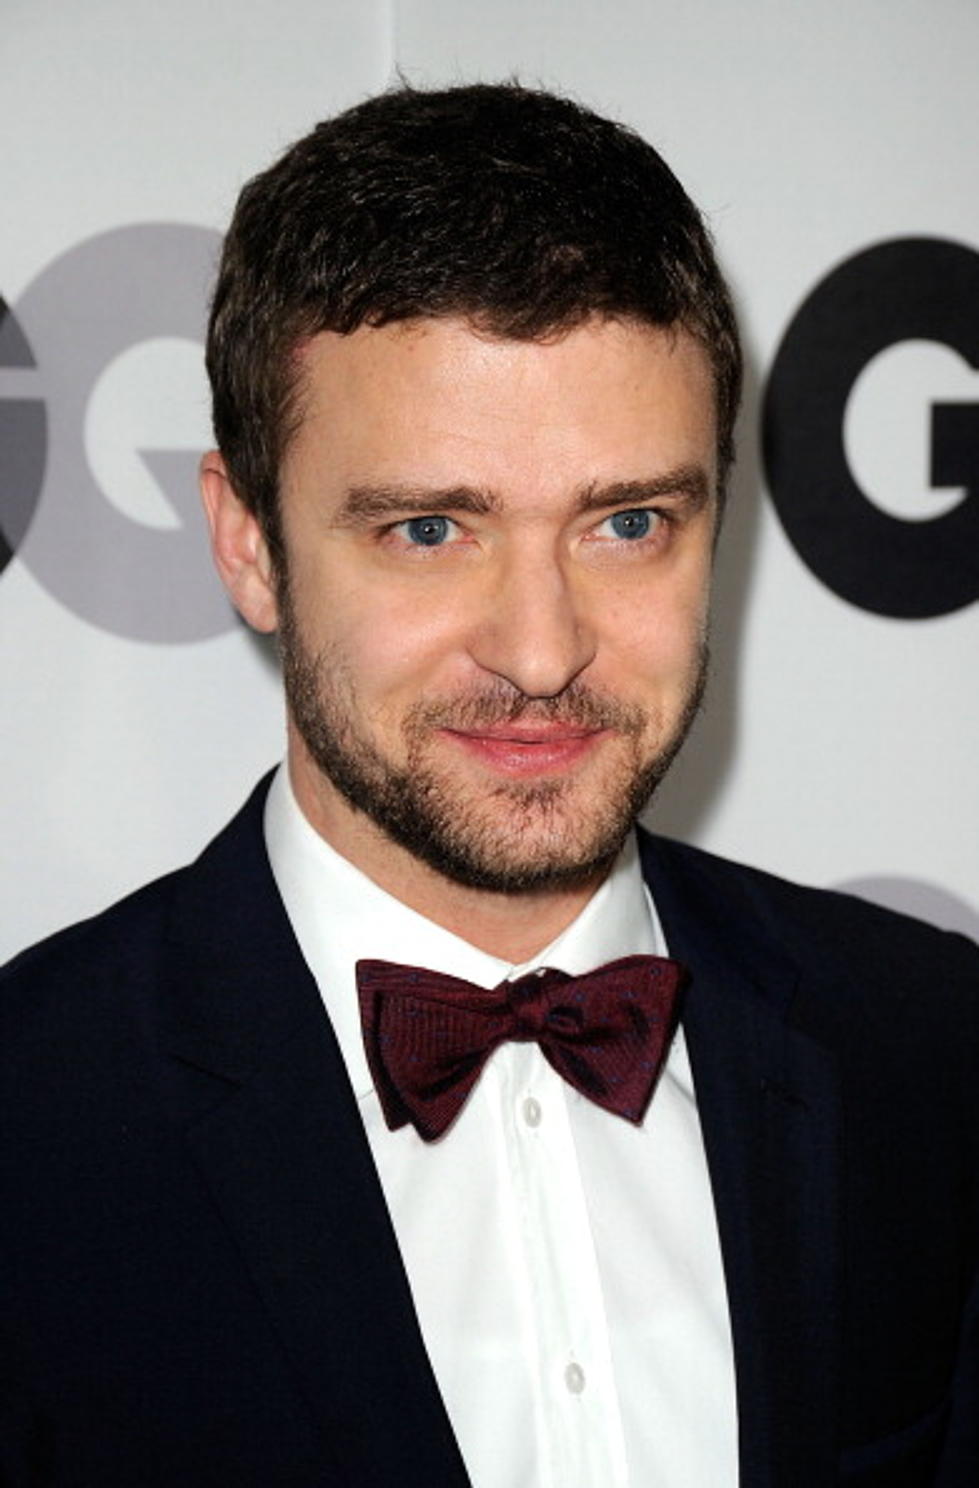 Justin Timberlake Discusses His Drug Use